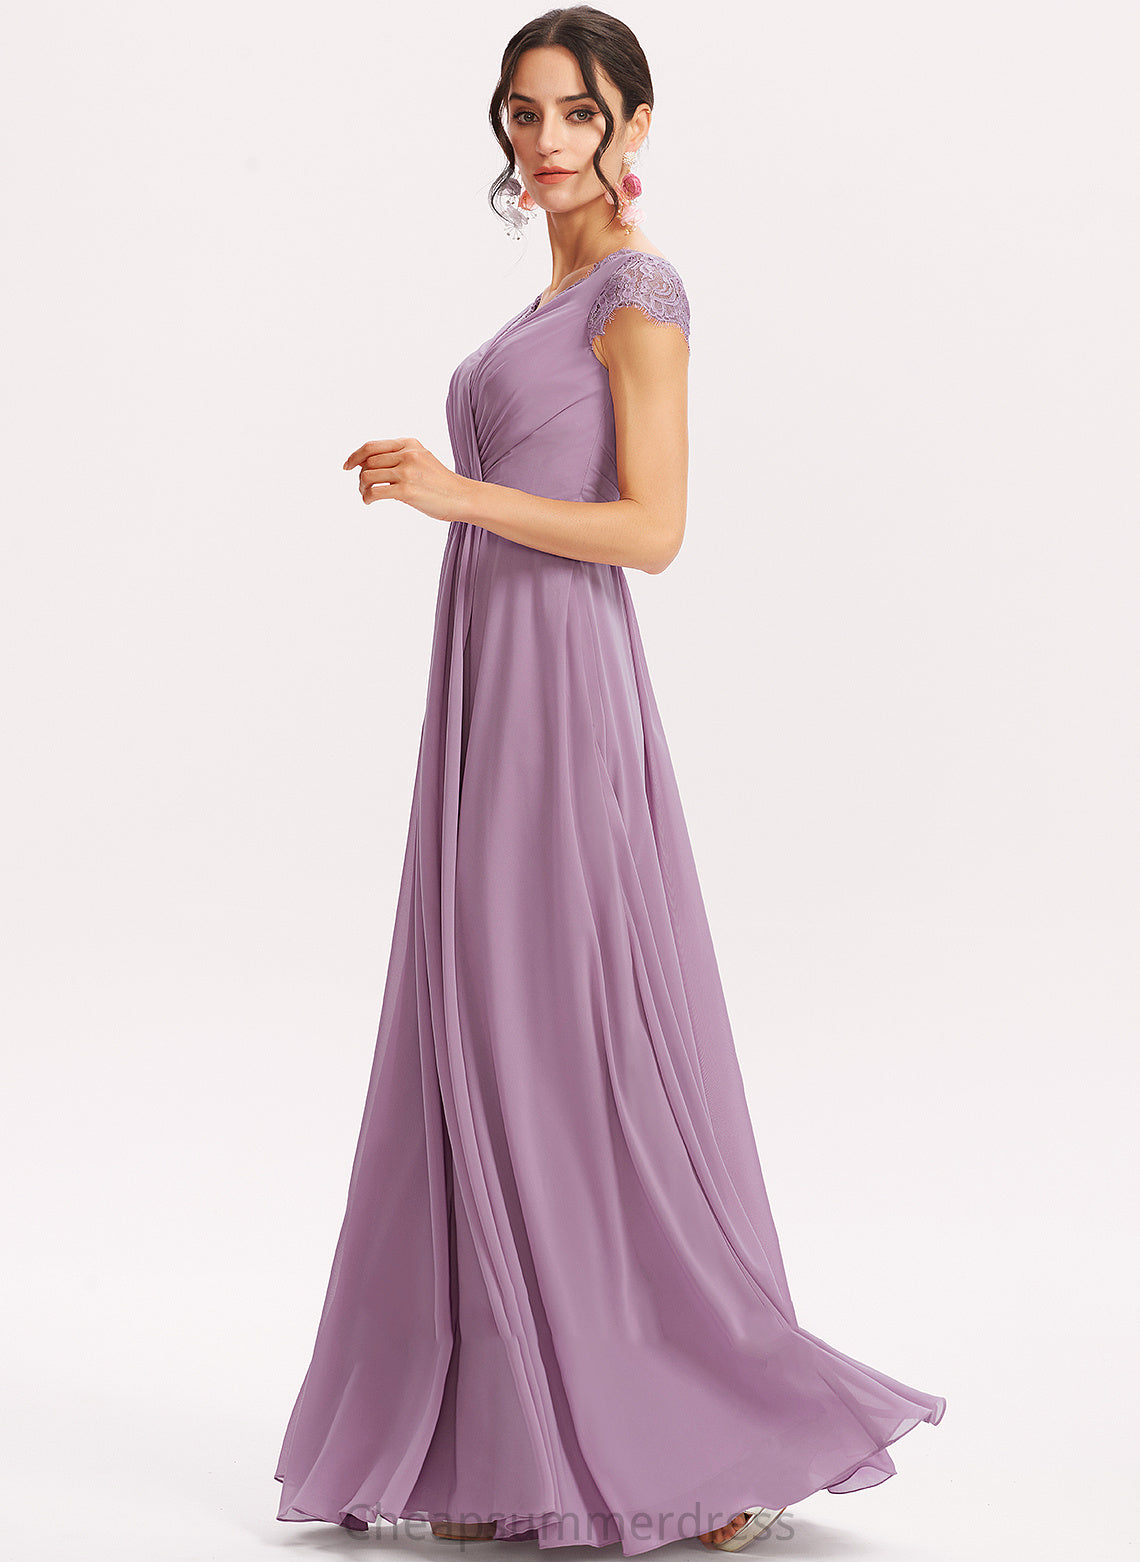 Length Silhouette Neckline Lace V-neck Fabric Embellishment Floor-Length A-Line Janelle Natural Waist Sleeveless